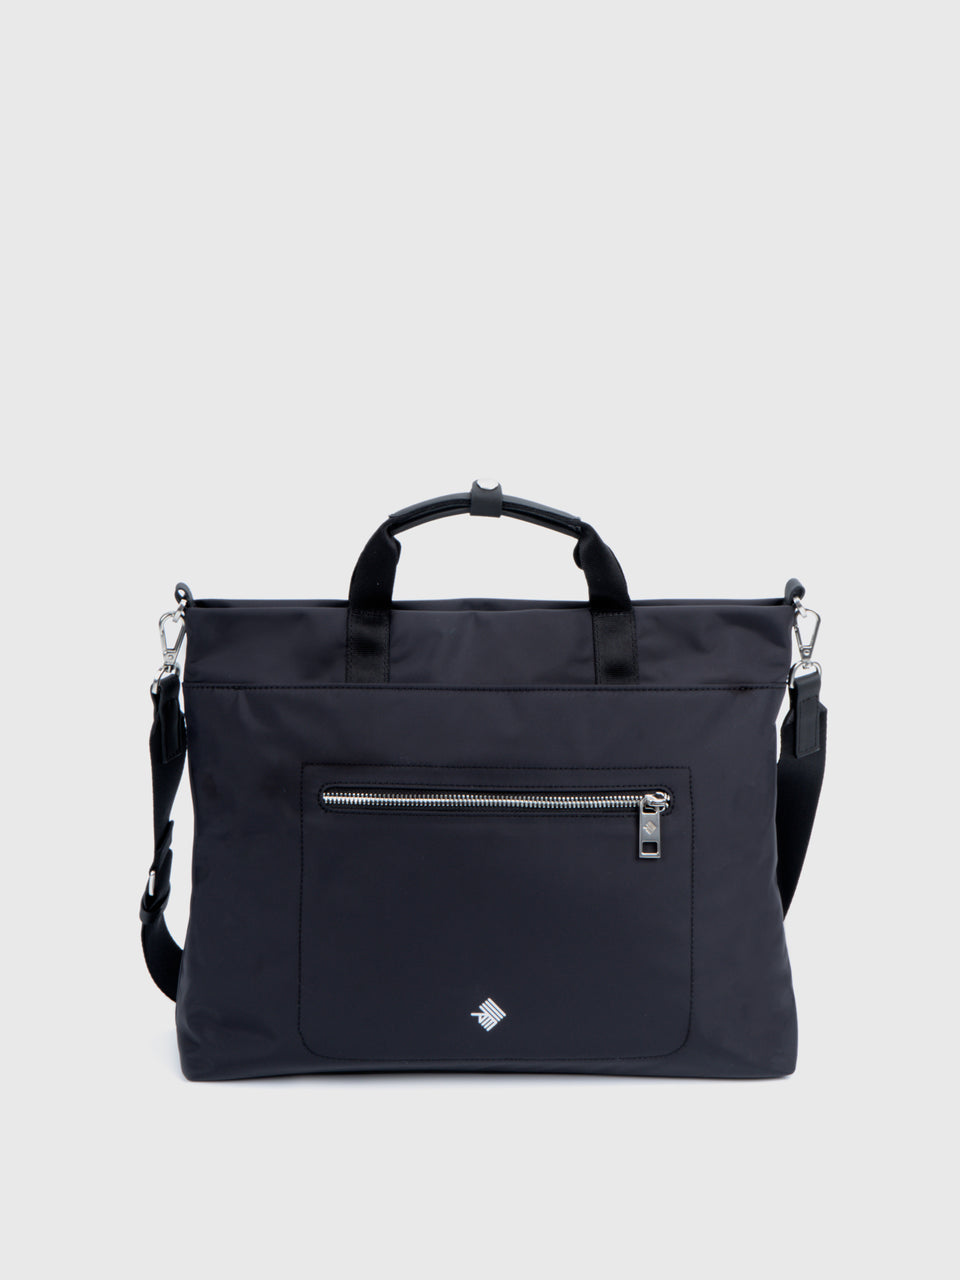 Office Bag - Charcoal Black